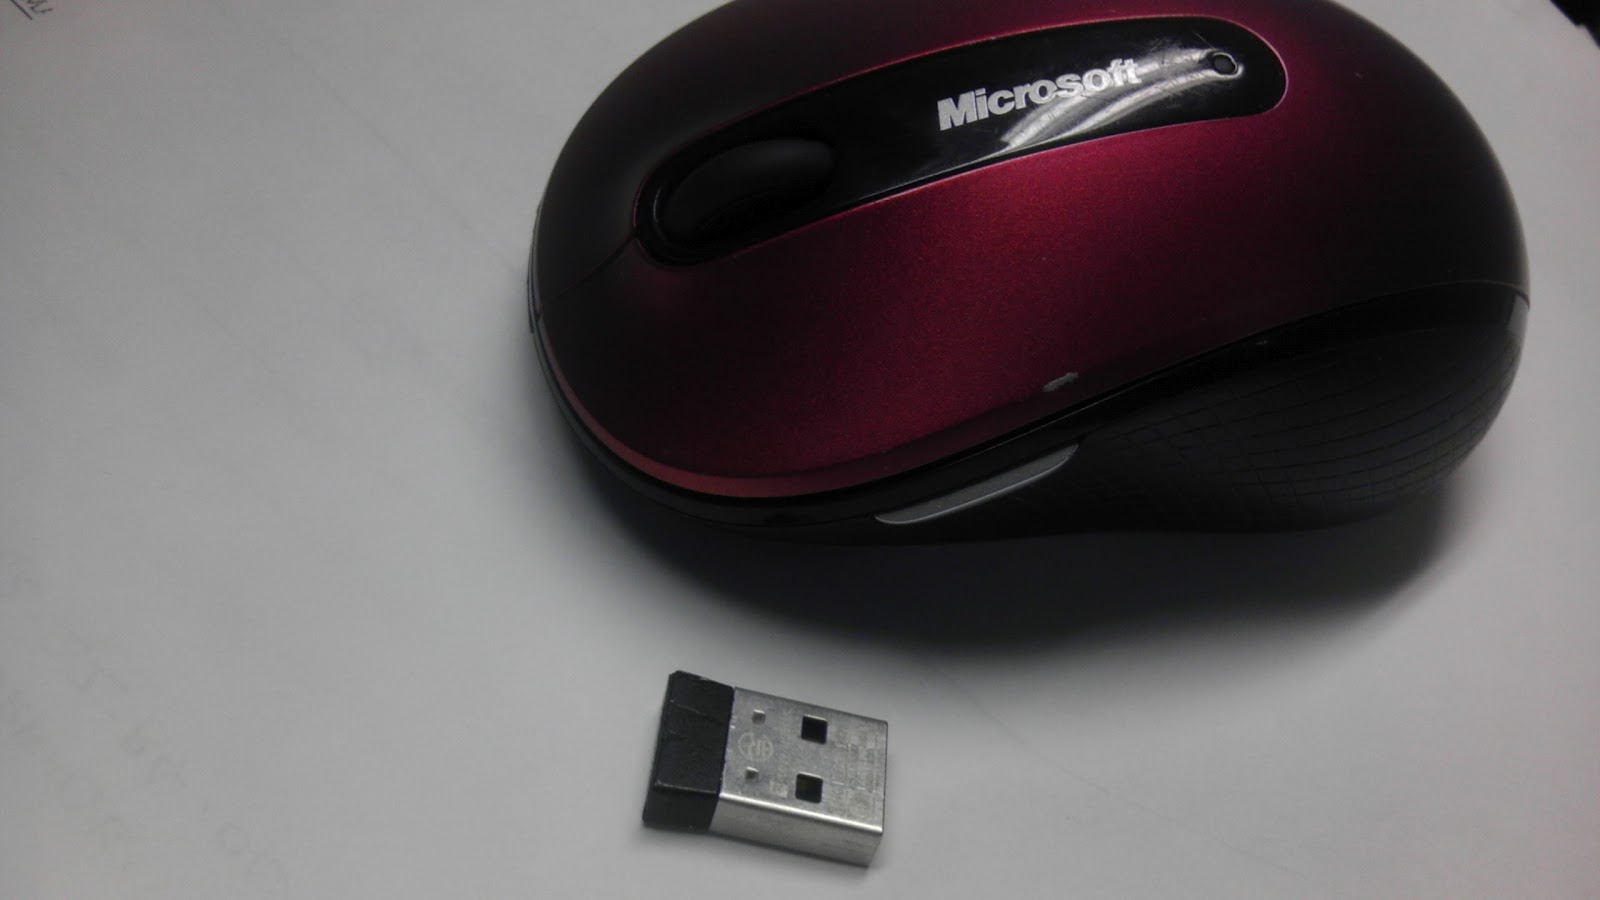 microsoft wireless mouse 3500 driver windows 10